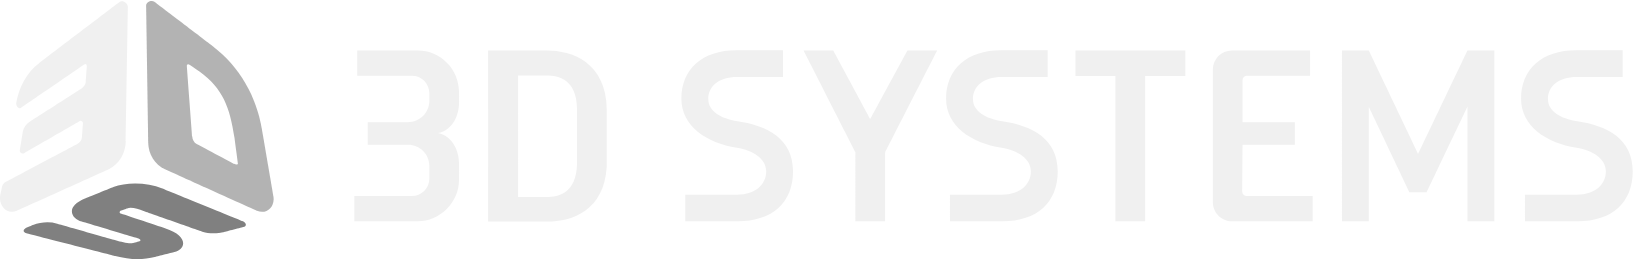 3D Systems Logo groß für dunkle Hintergründe (transparentes PNG)